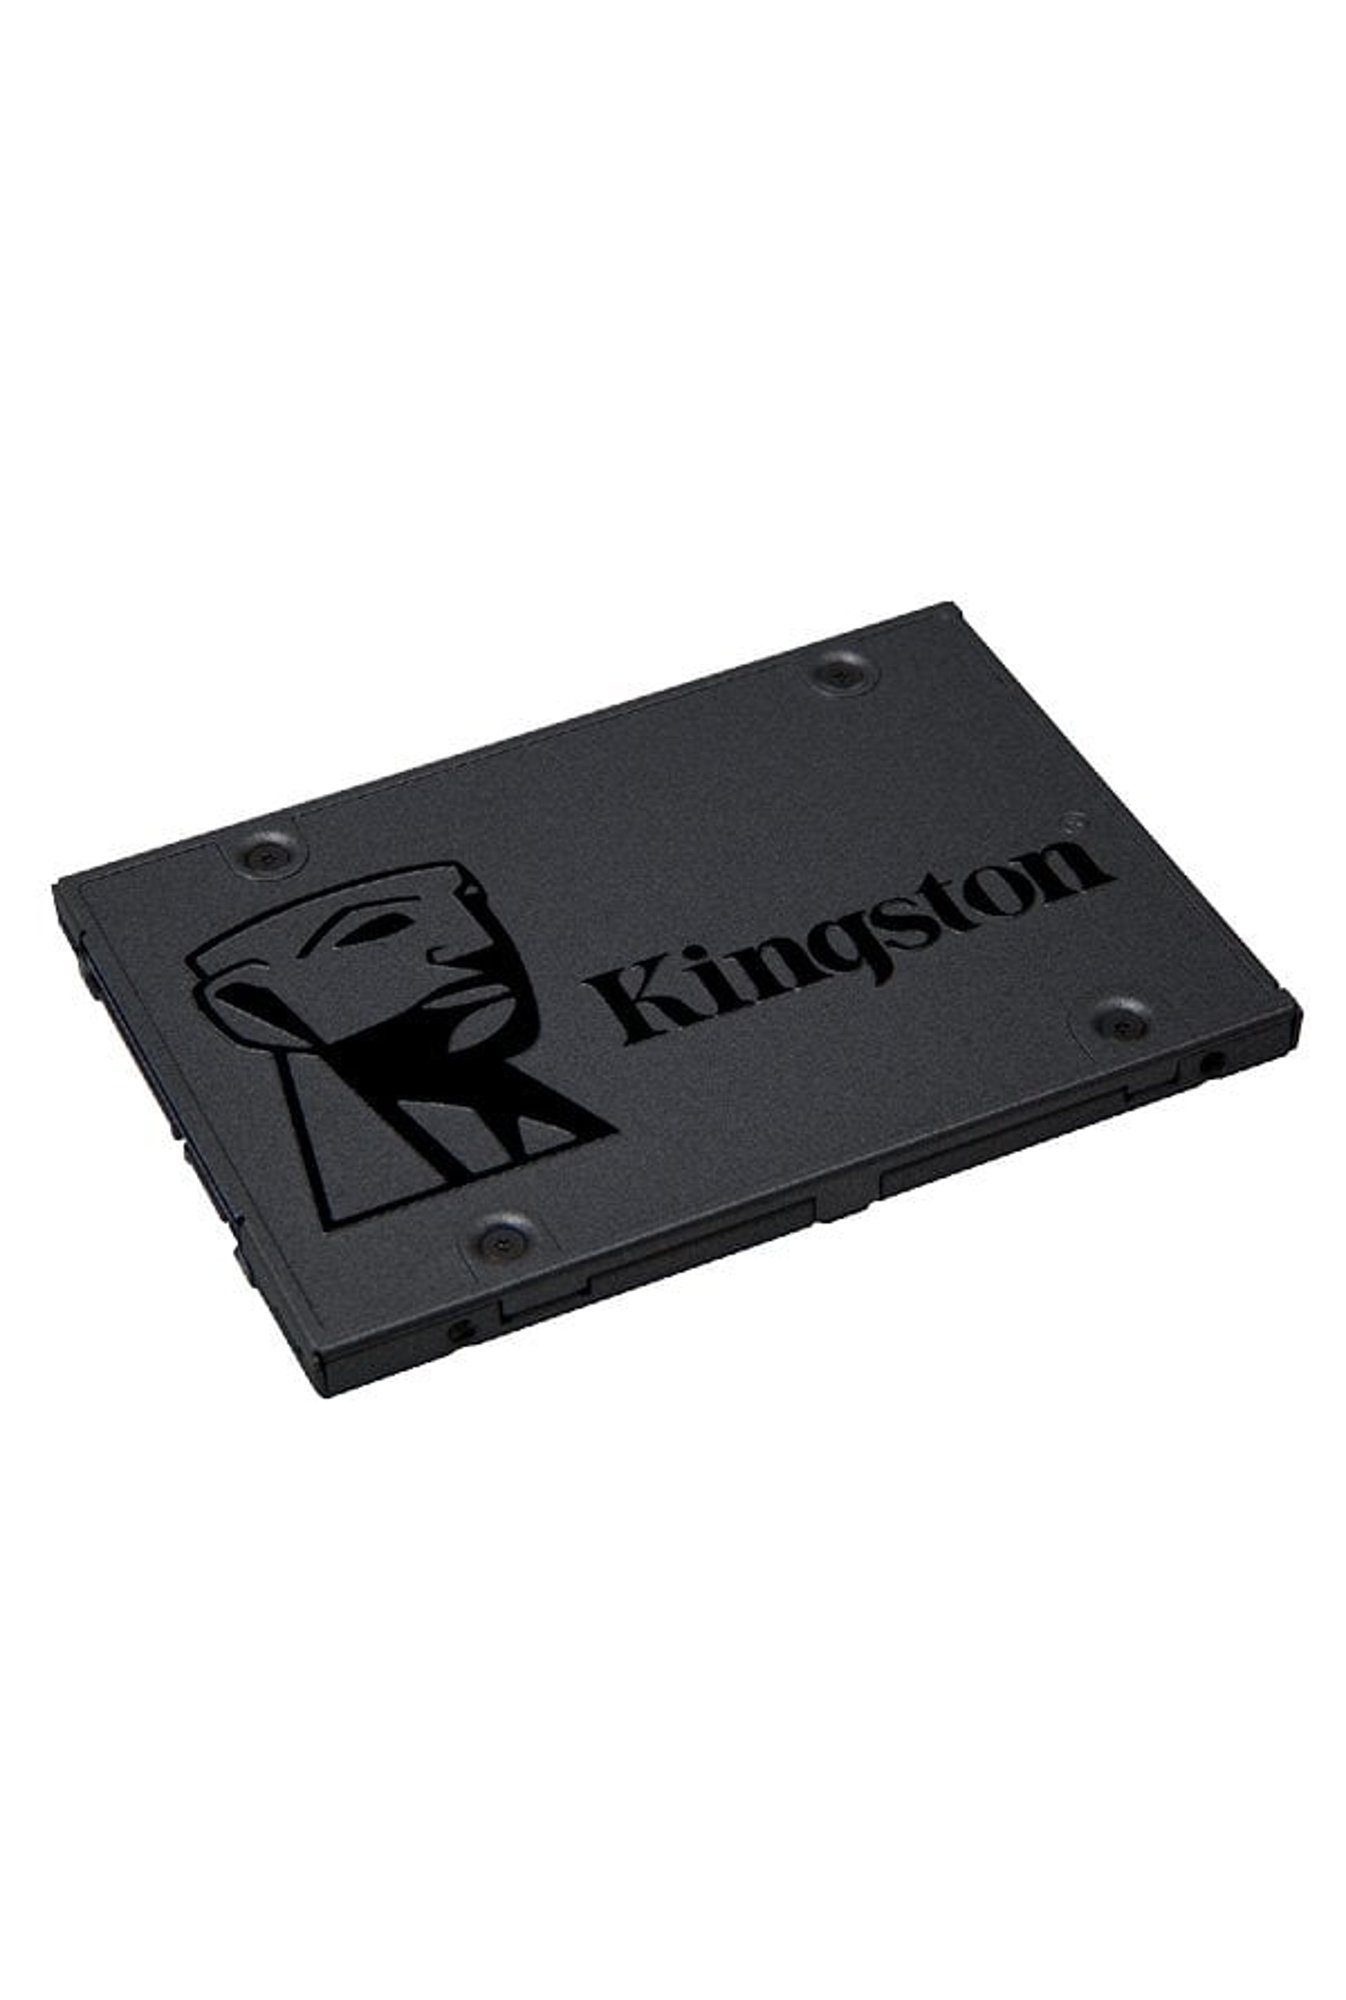 Buy Online Kingston A400 2.5 inch 240GB SATA III TLC SSD SA400S37/240G In  India